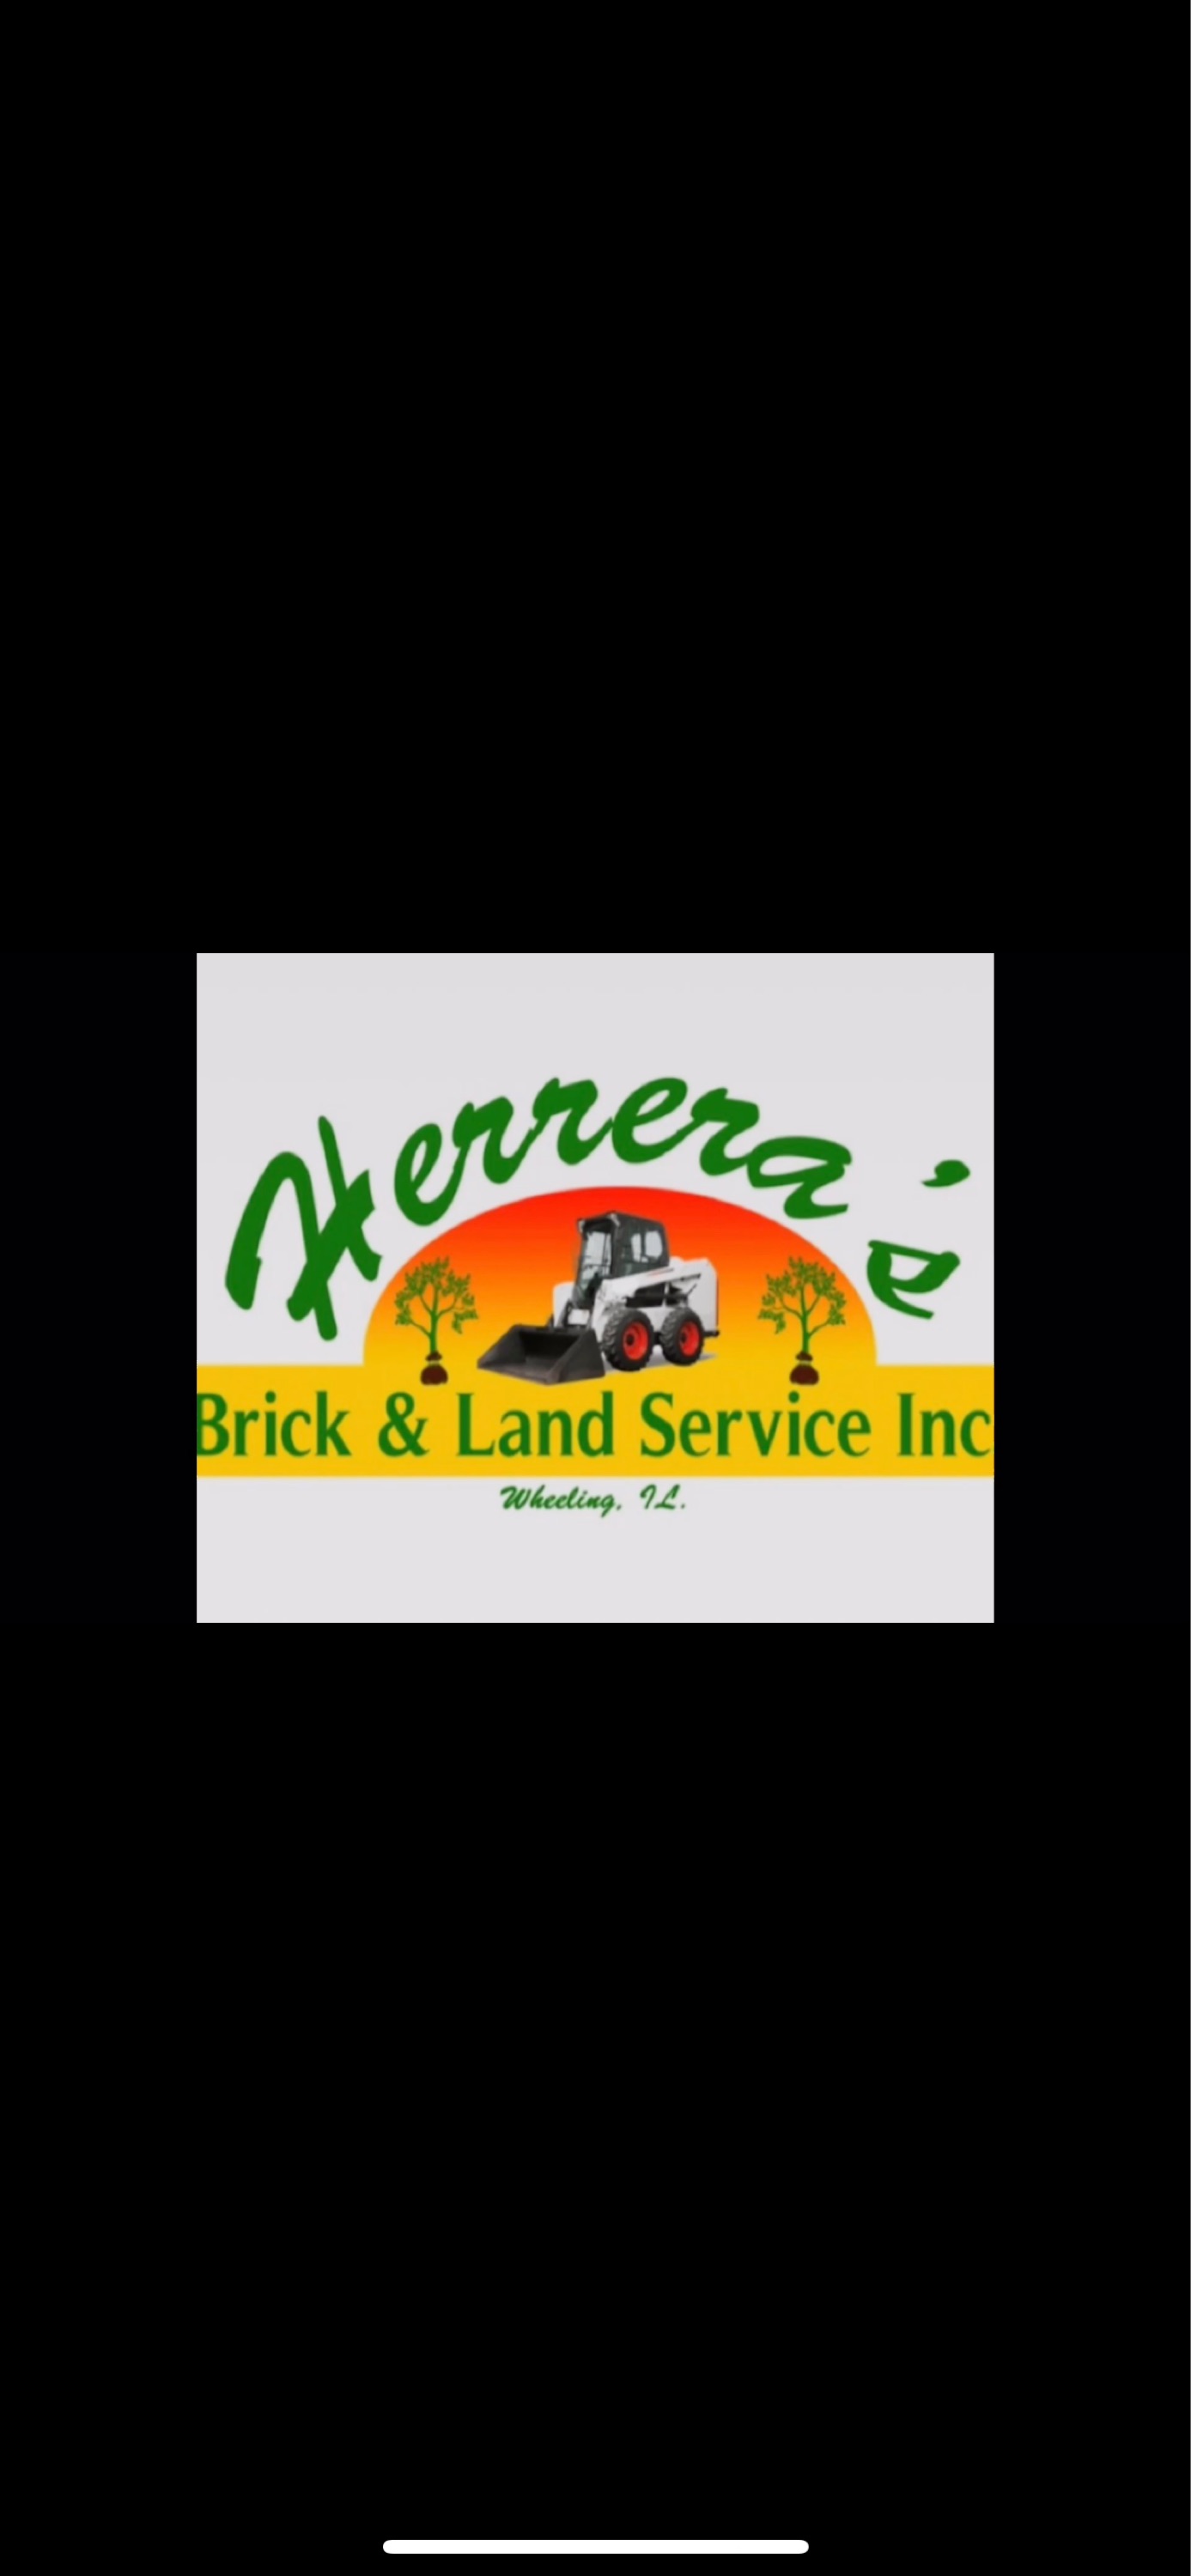 Herrera's Brick & Land Service, Inc. Logo